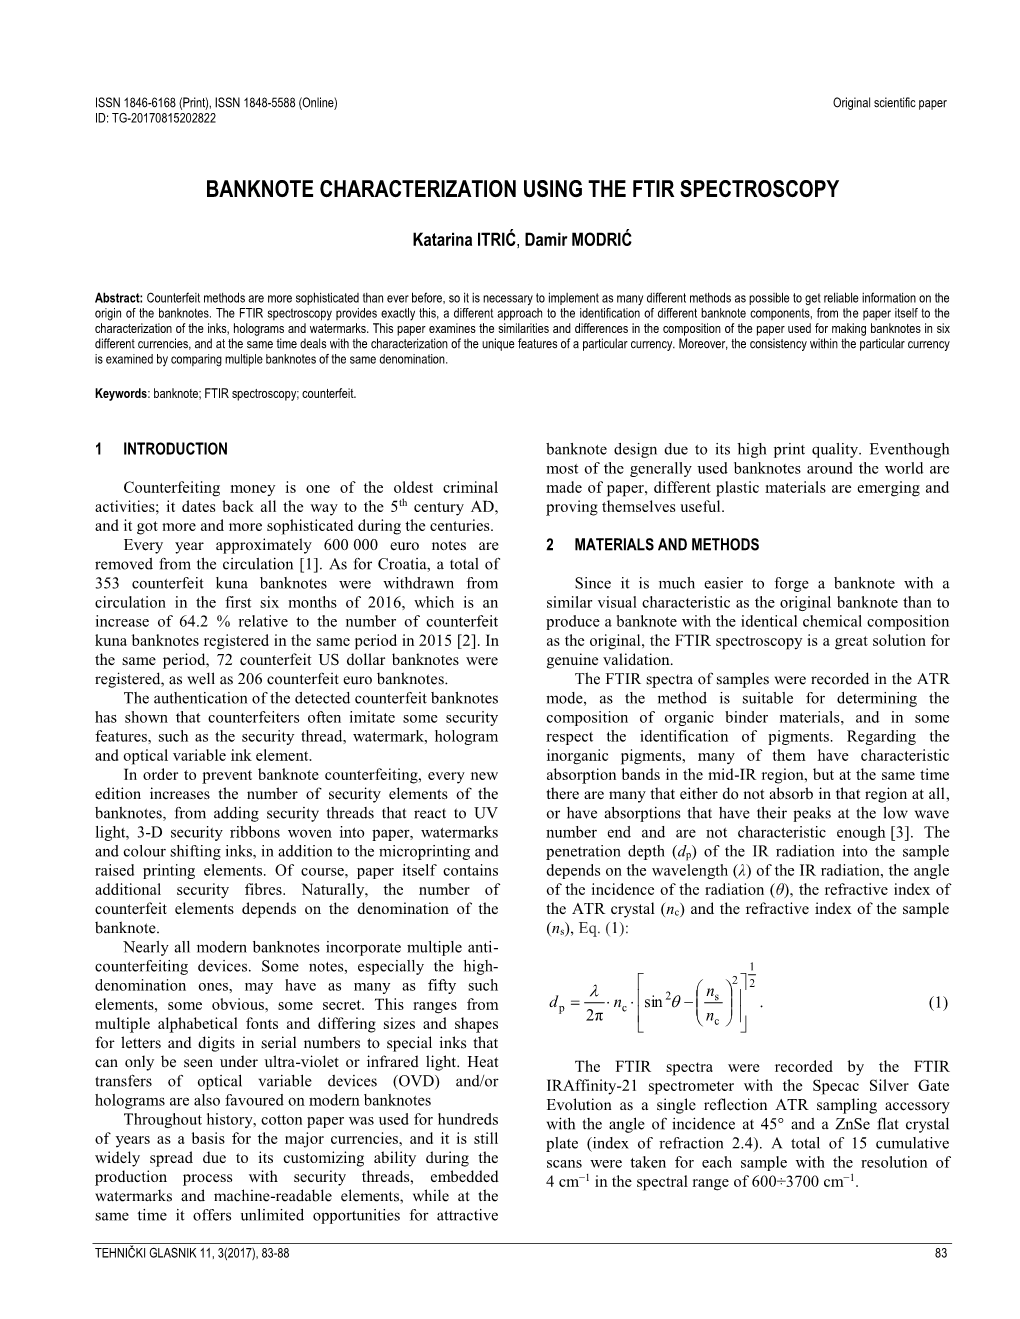 Banknote Characterization Using the Ftir Spectroscopy